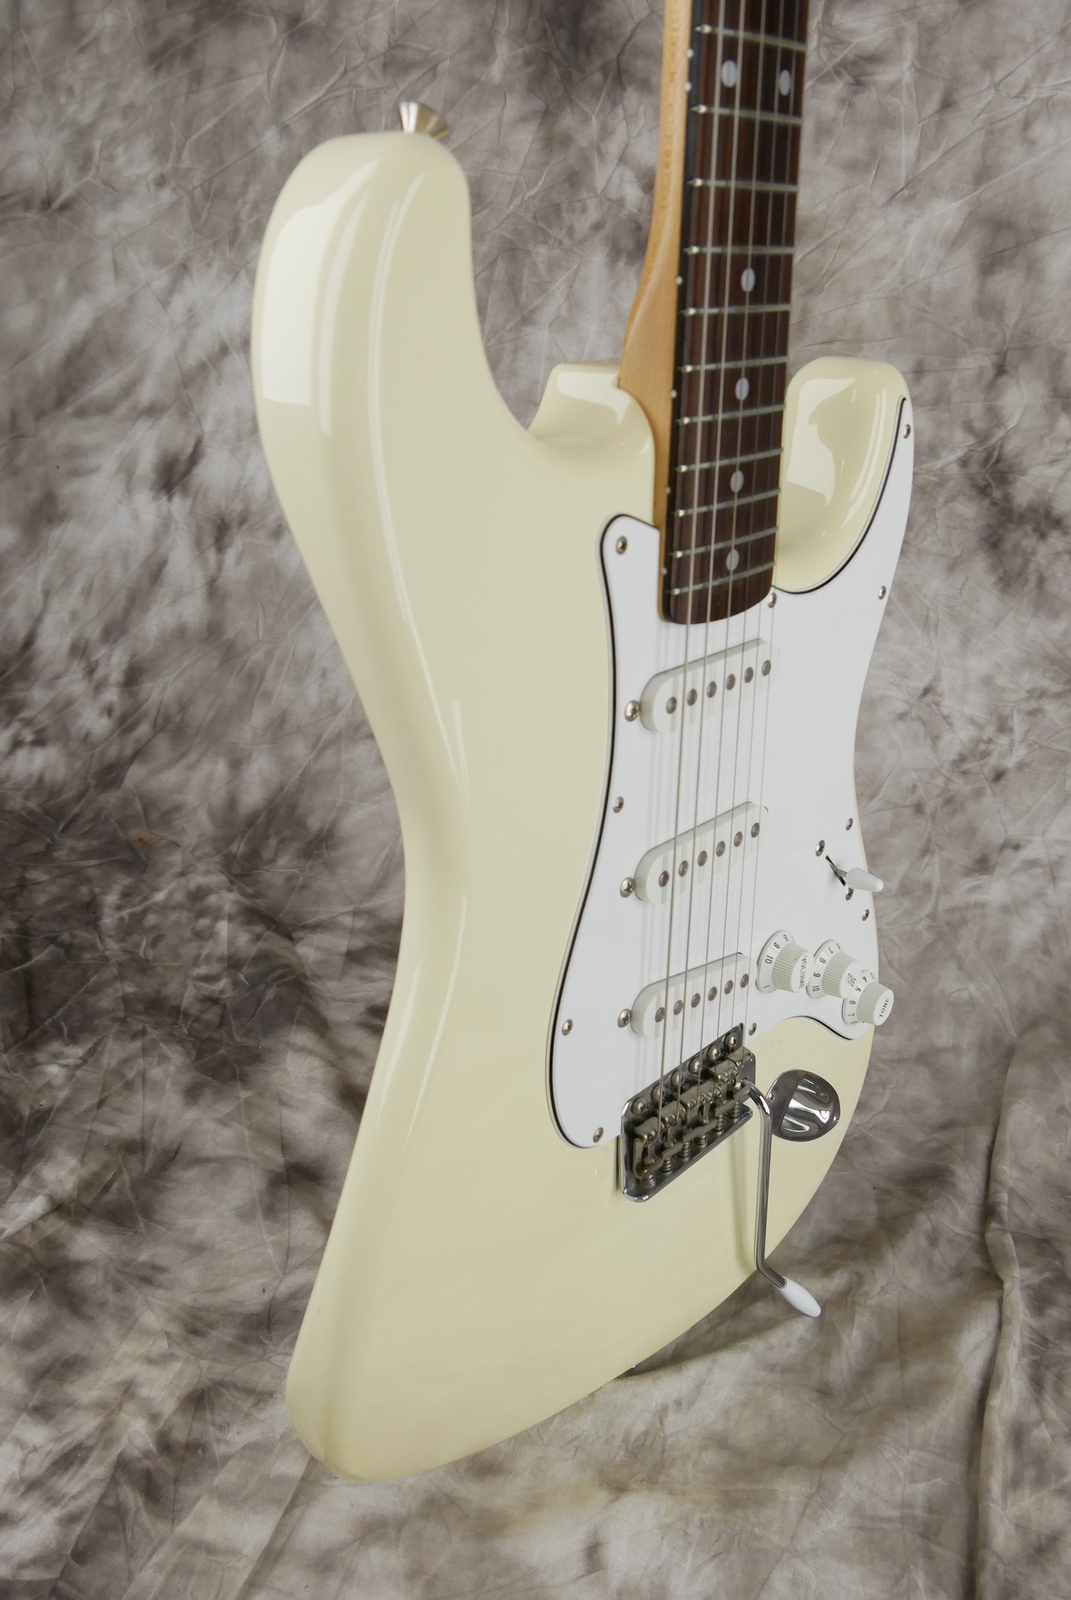 img/vintage/5375/Fender_Stratocaster_Squier_series_Japan_olympic_white_1993-005.JPG